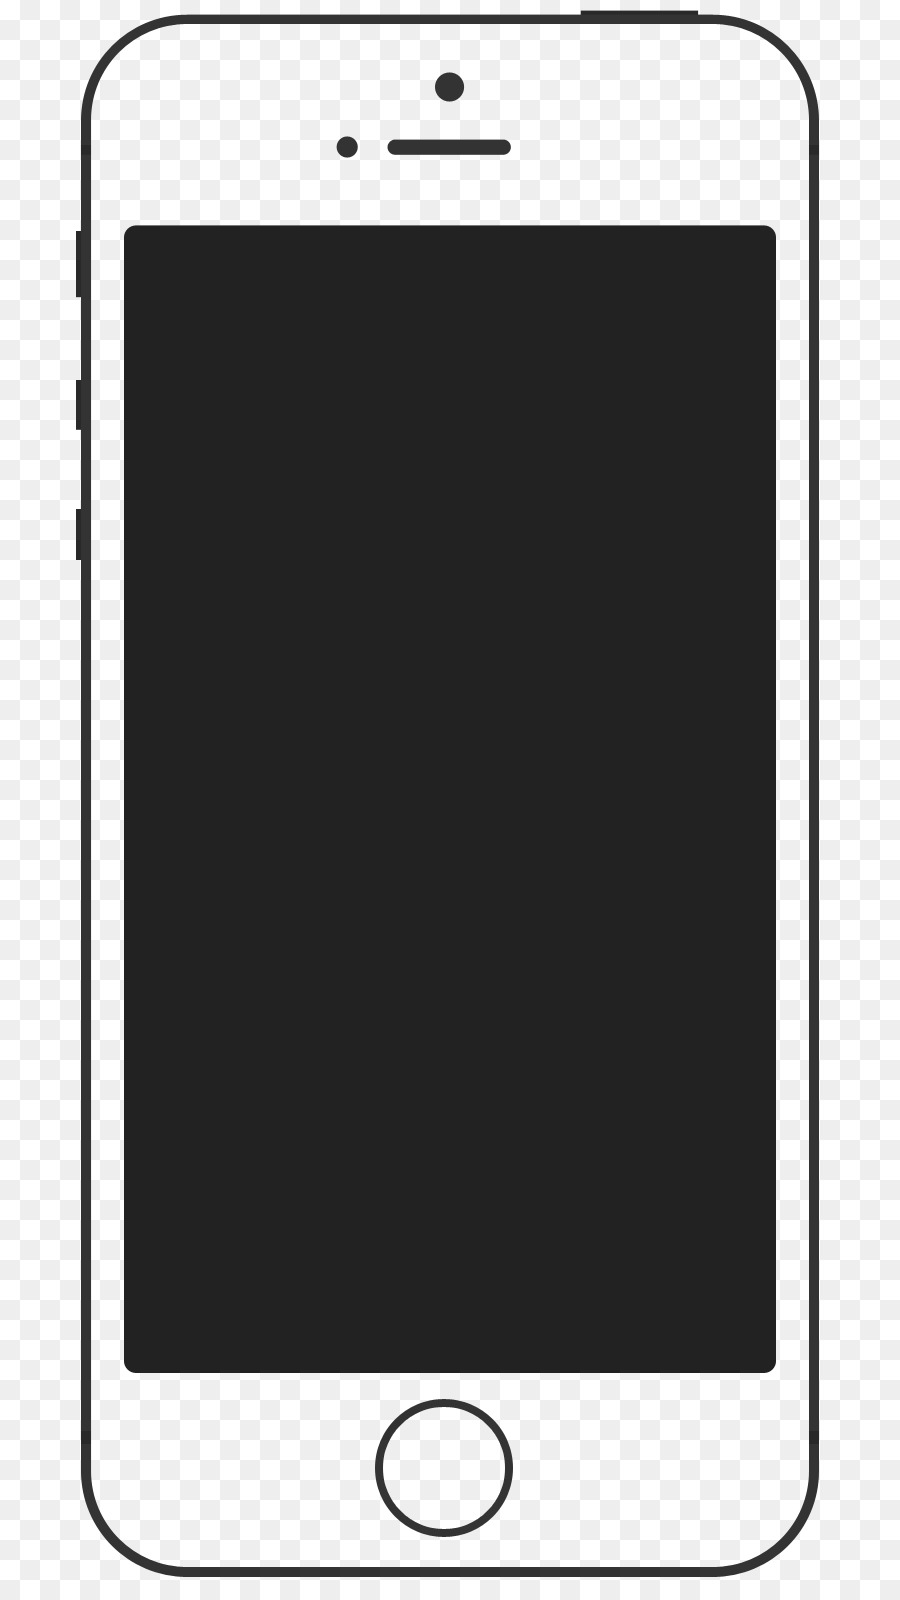 Smartphone iPhone Clip art - smartphone